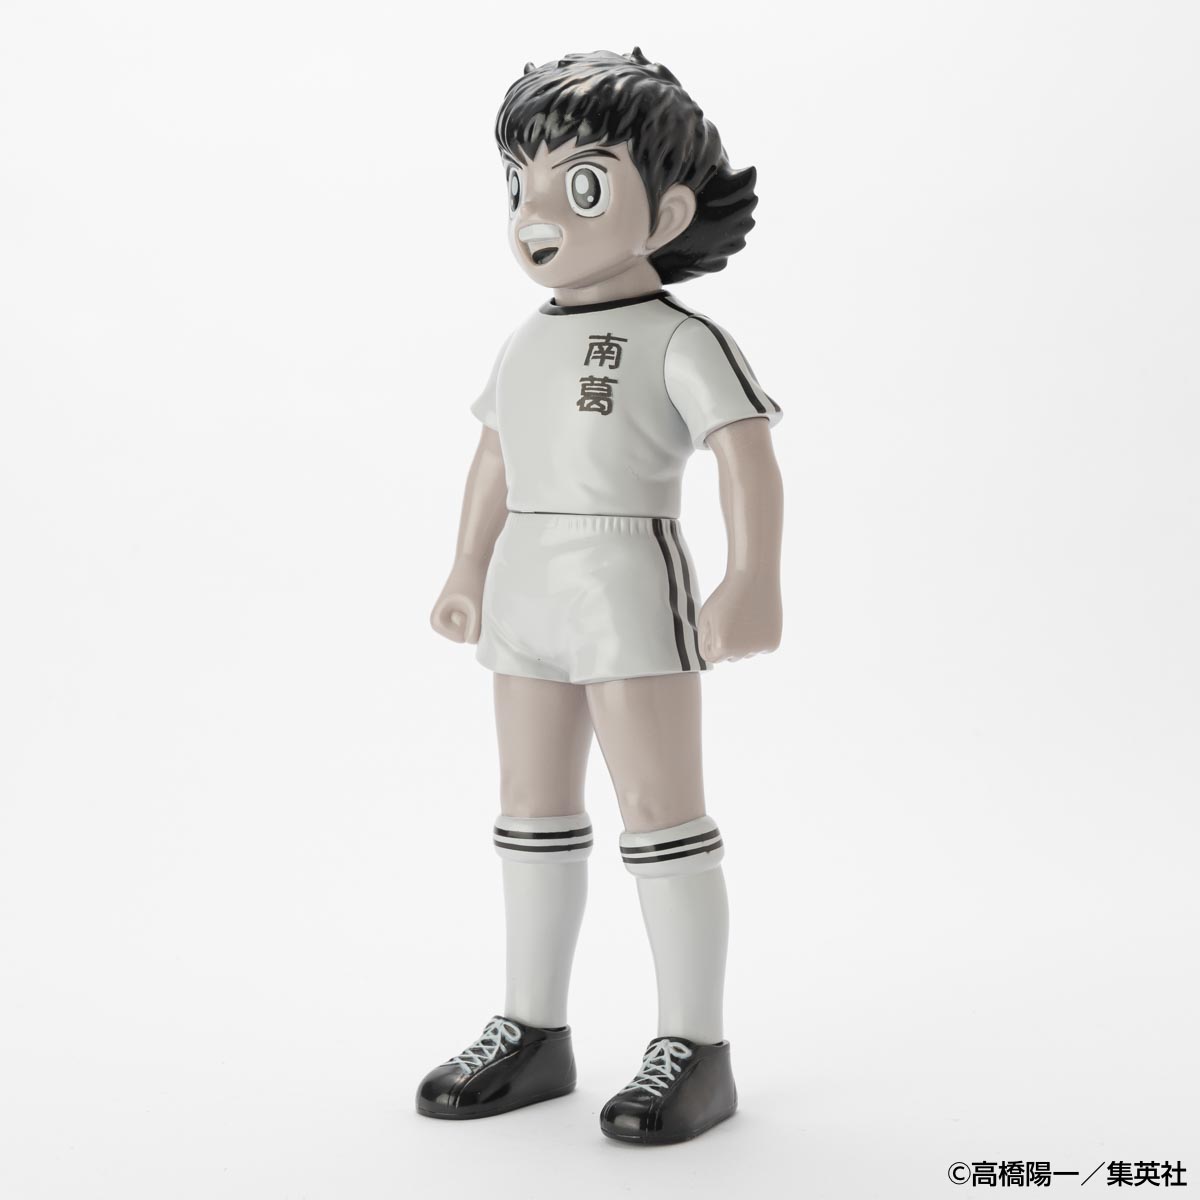 Captain Tsubasa sofvi collection Ozora Tsubasa ‘Nankatsu SC uniform(black and white) ver.’